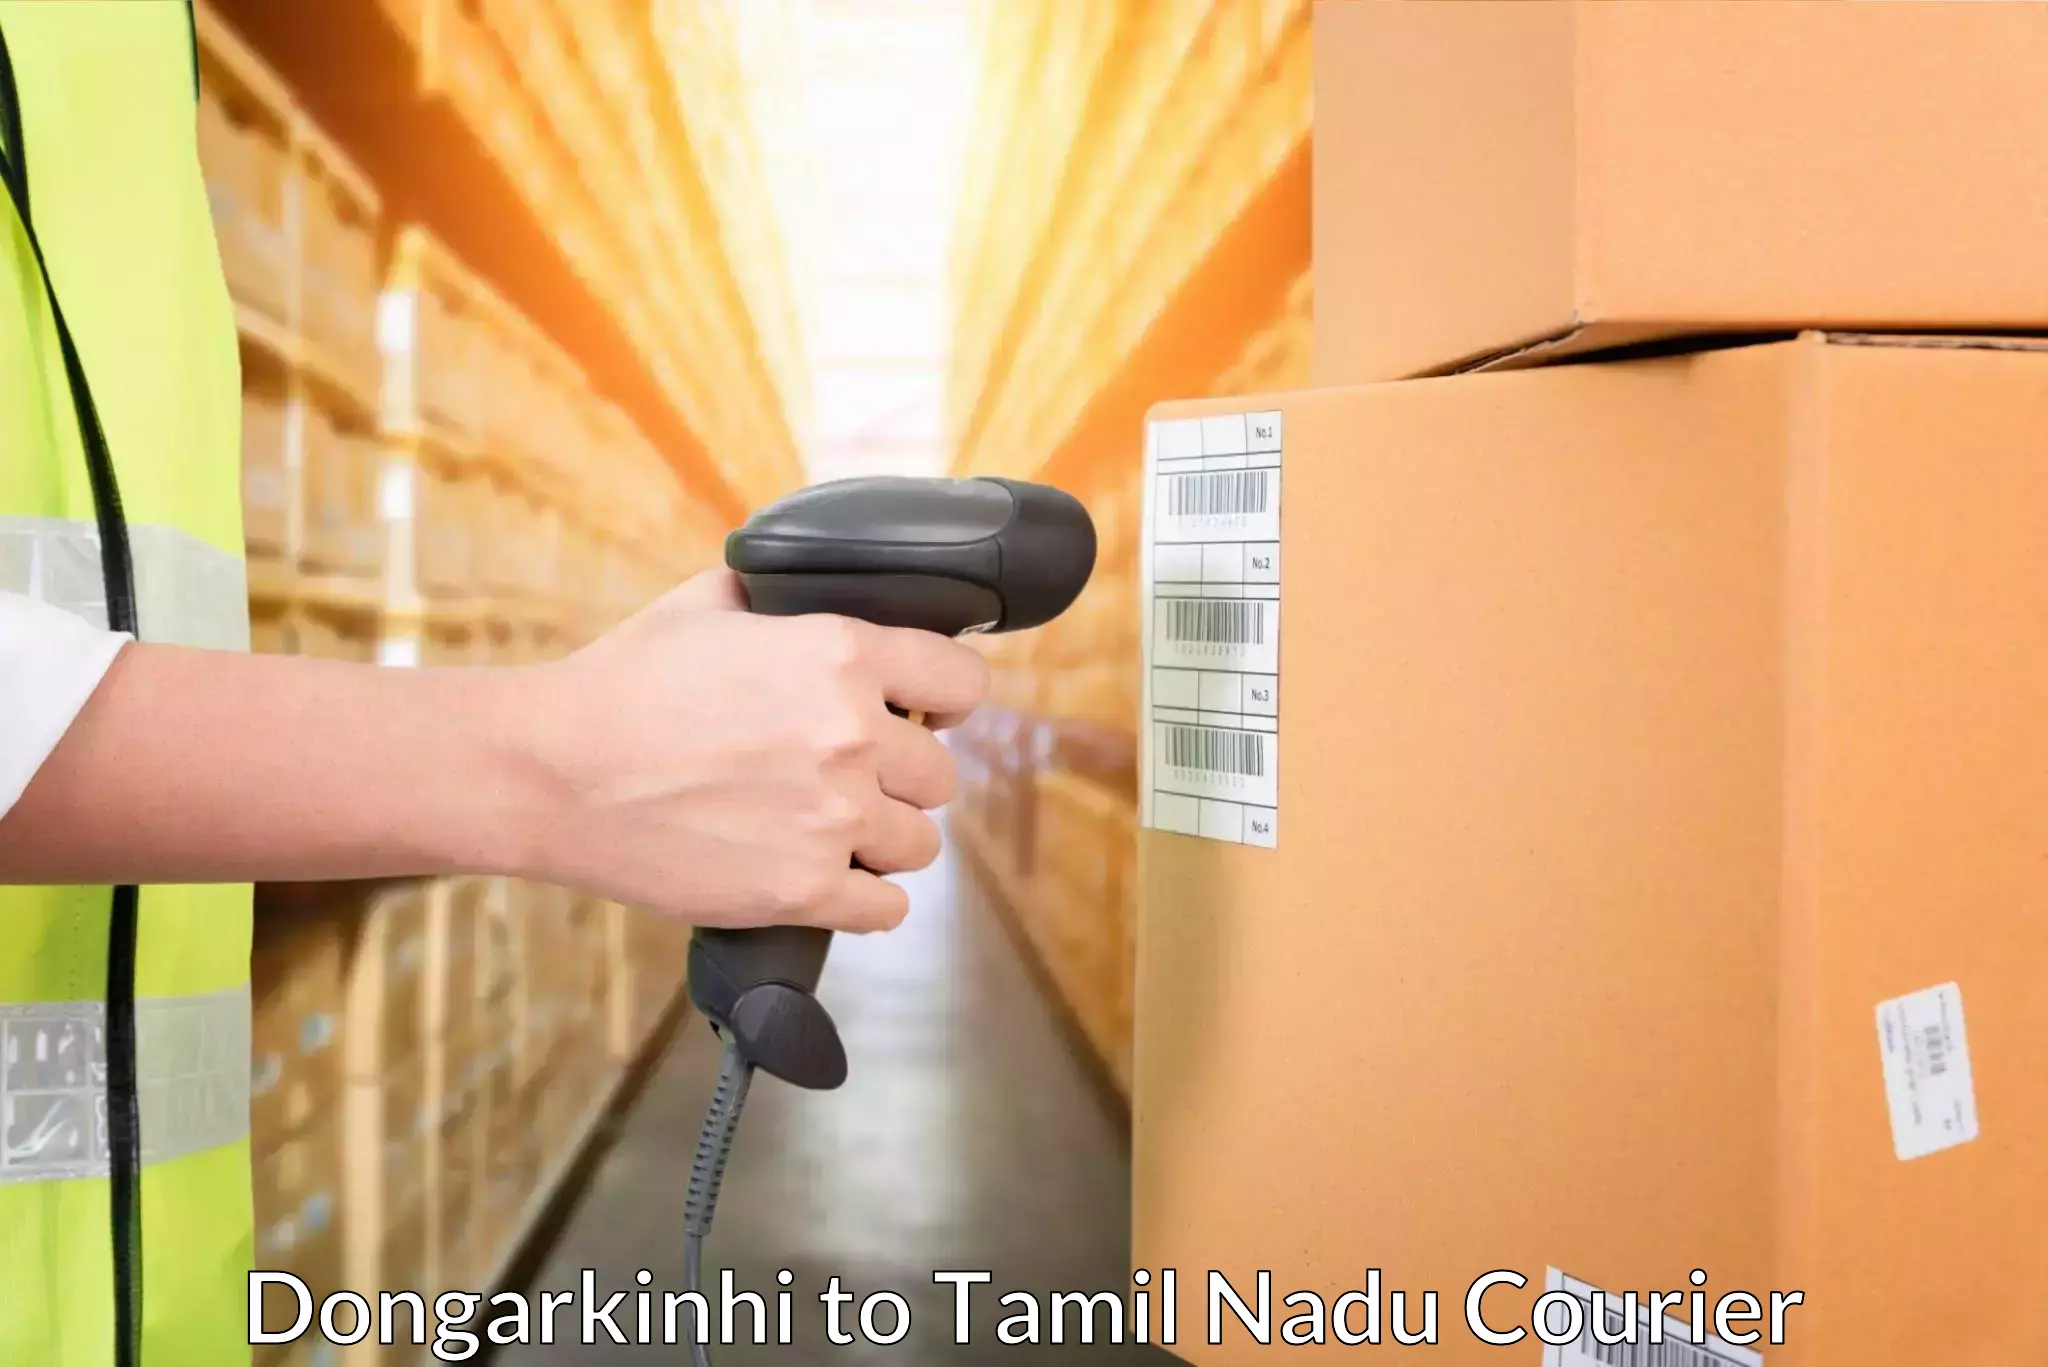 Express delivery network Dongarkinhi to Thiruvadanai